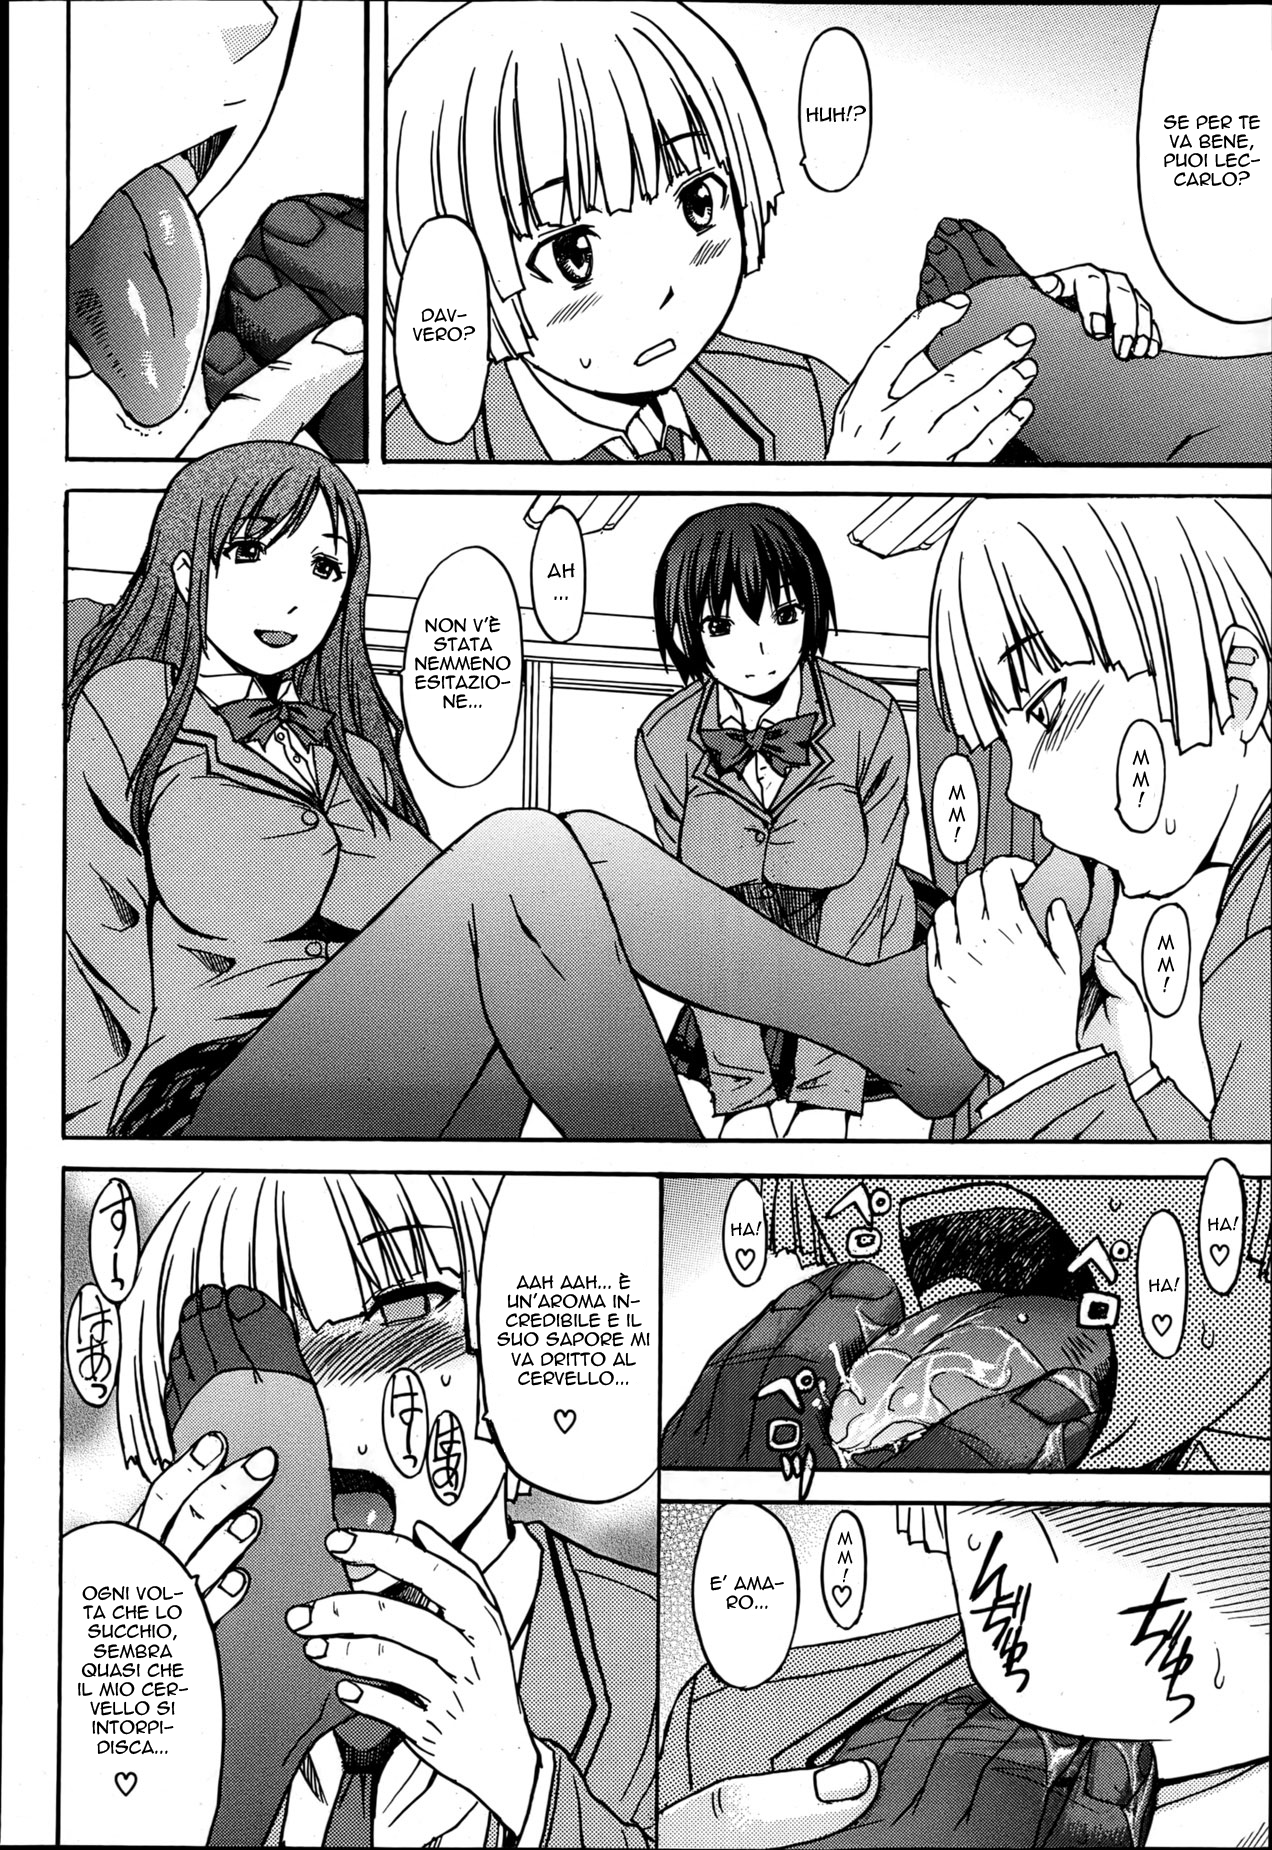 Anime manga foot fetish